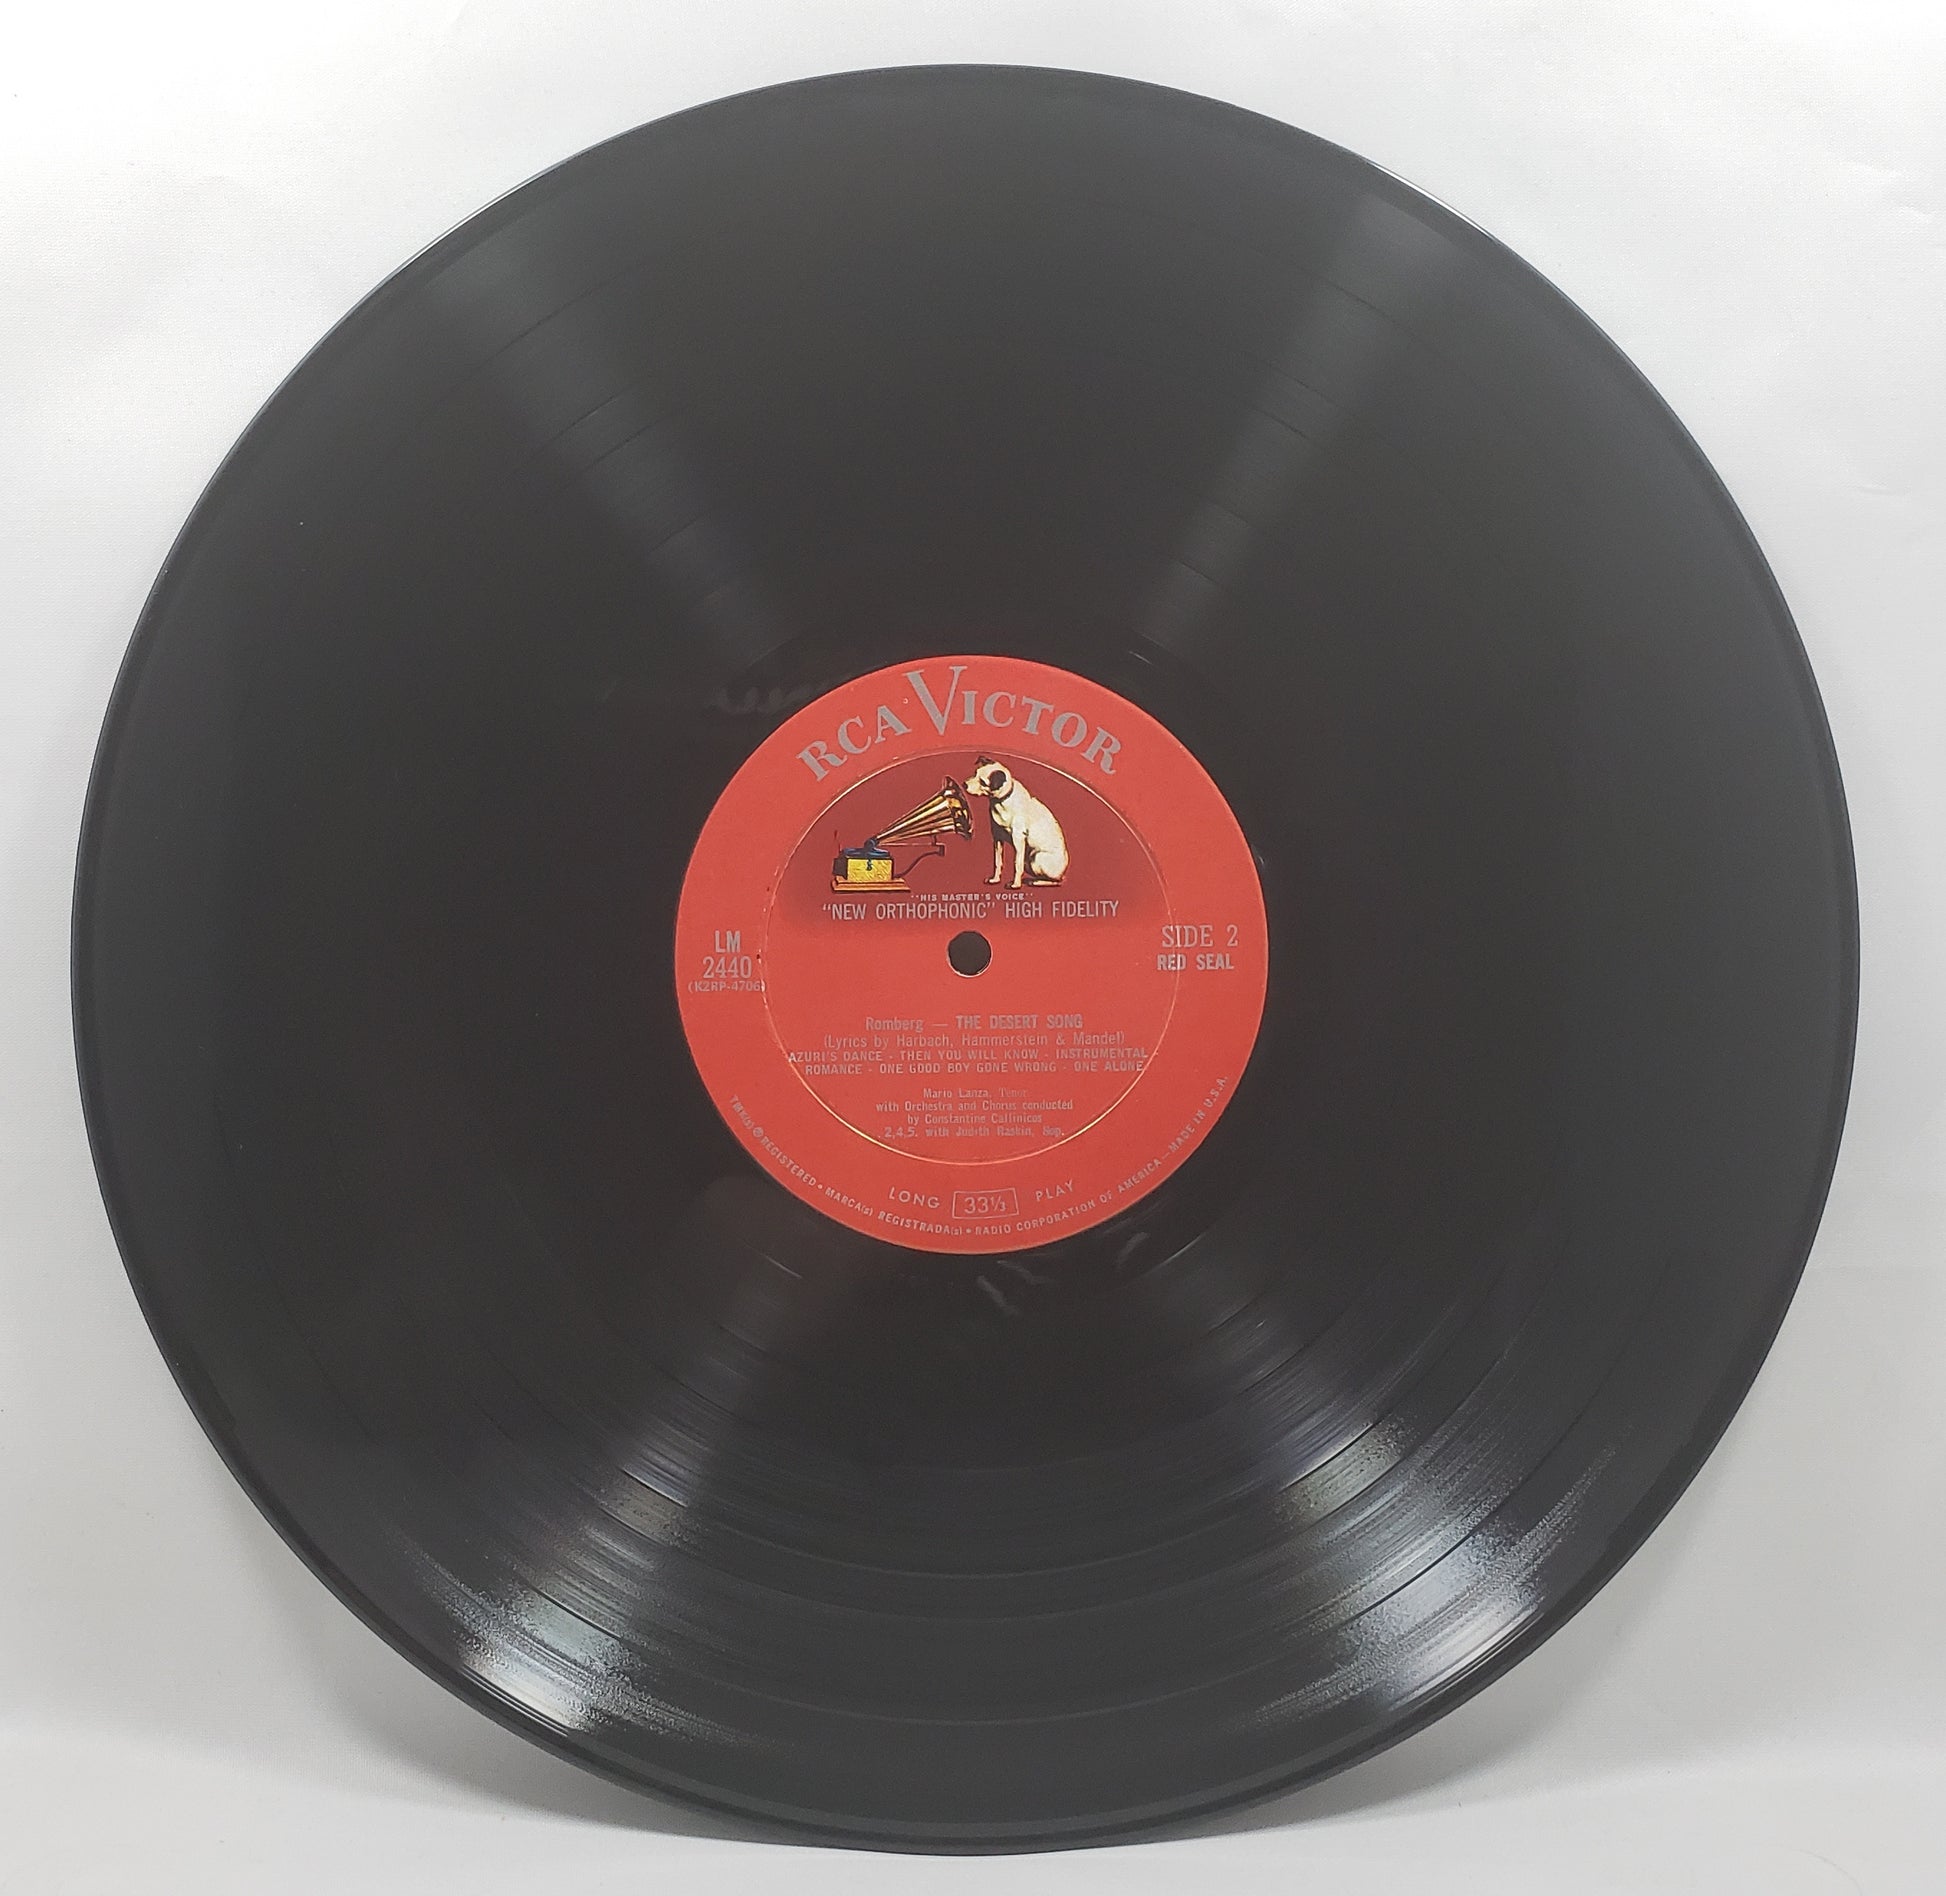 Mario Lanza - The Desert Song [1960 Mono Indianapolis] [Used Vinyl Record LP]